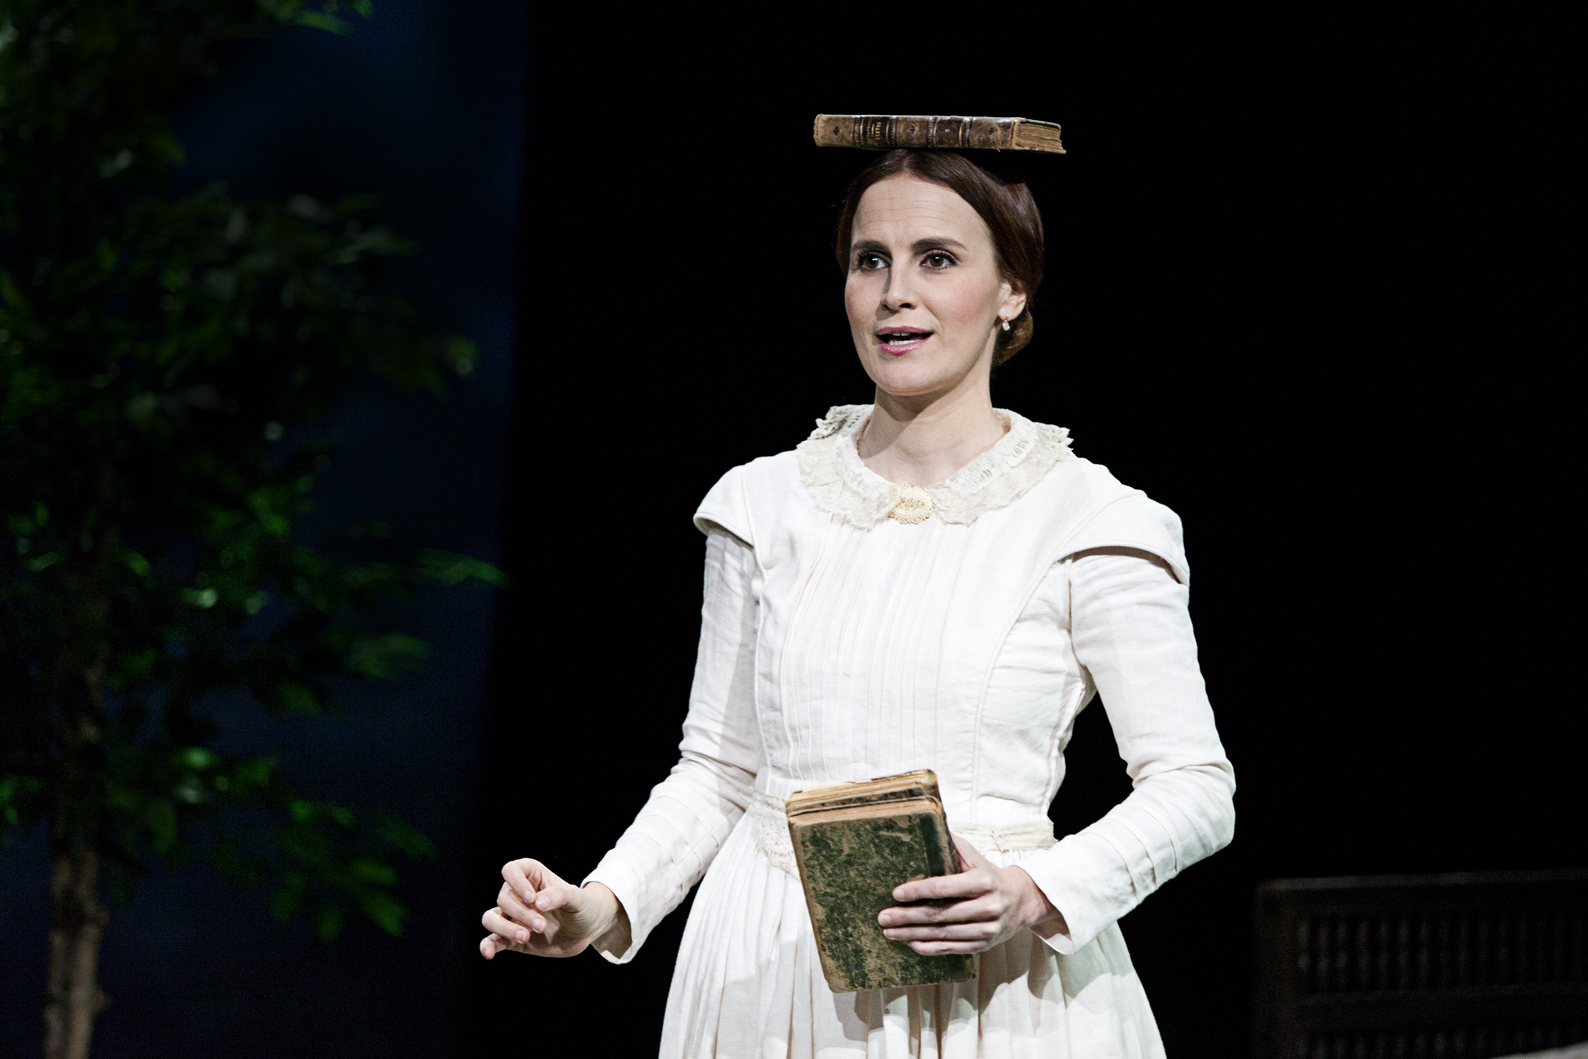 La dama de blanco, Emily Dickinson, teatro quique san francisco, la guindalera, juan pastor